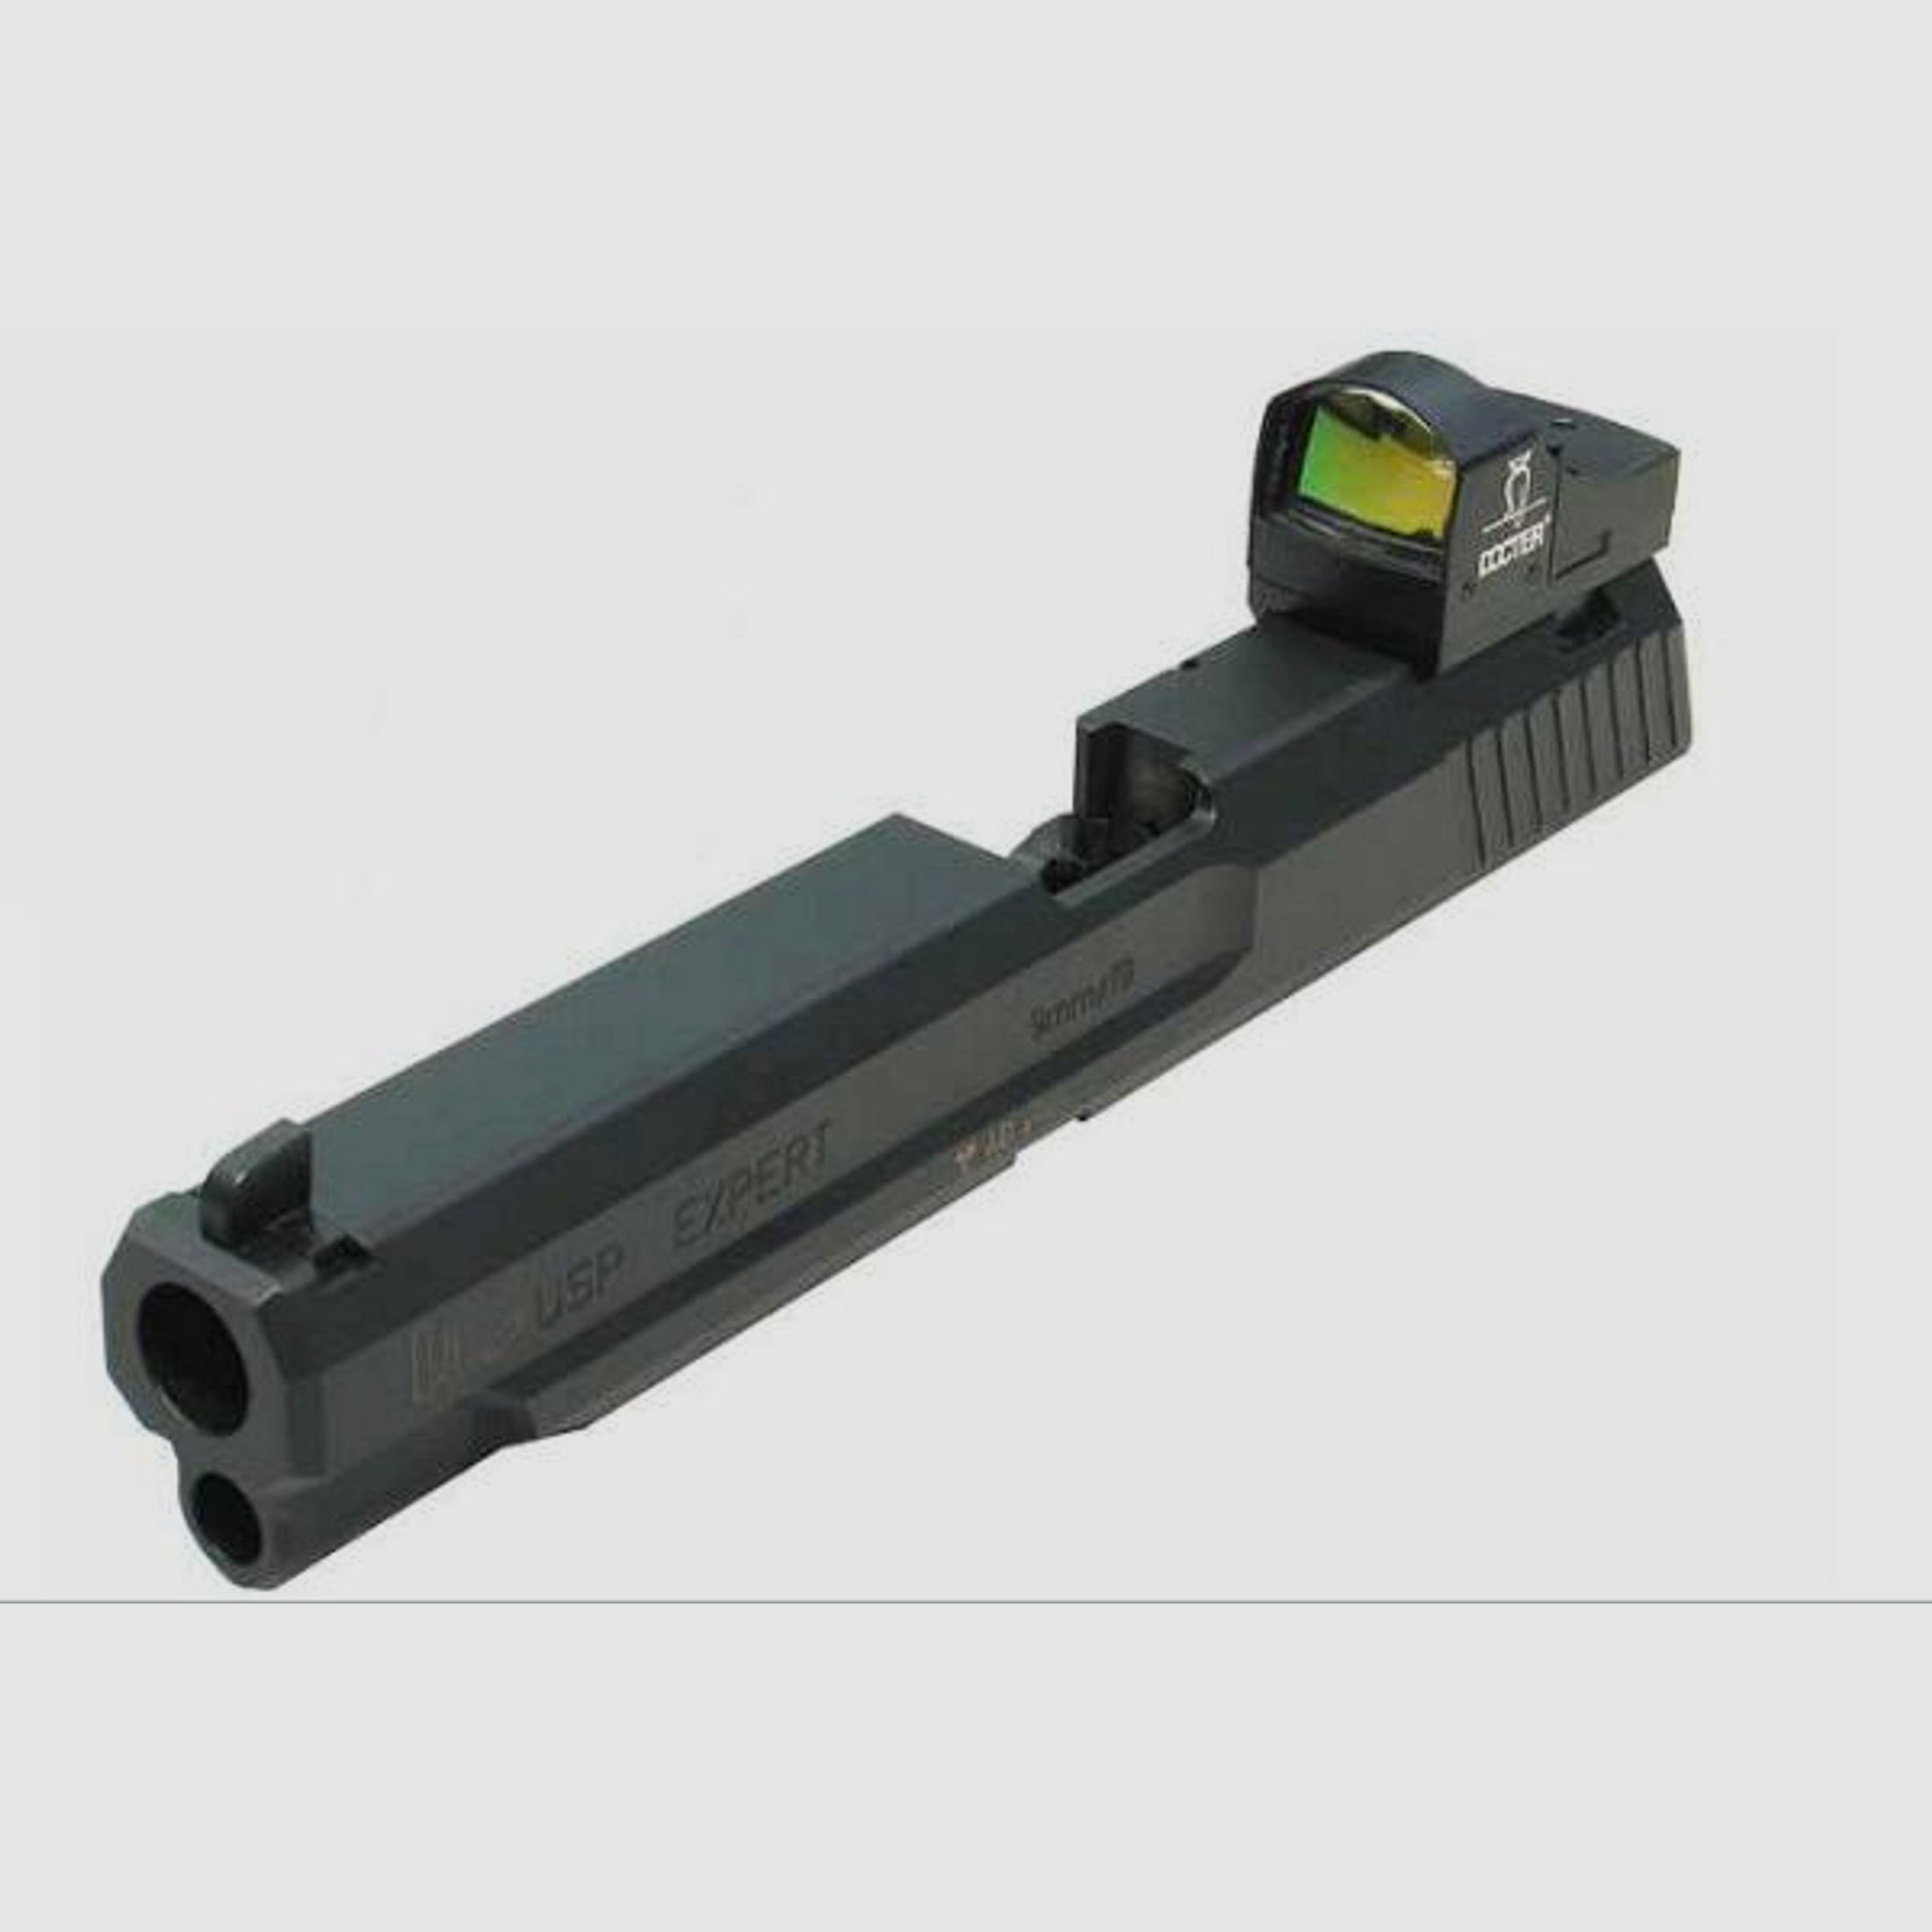 HENNEBERGER Montage f. Leuchtpunktvisier Montageplatte Docter Sight f. Glock  -9mm/40/357SIG